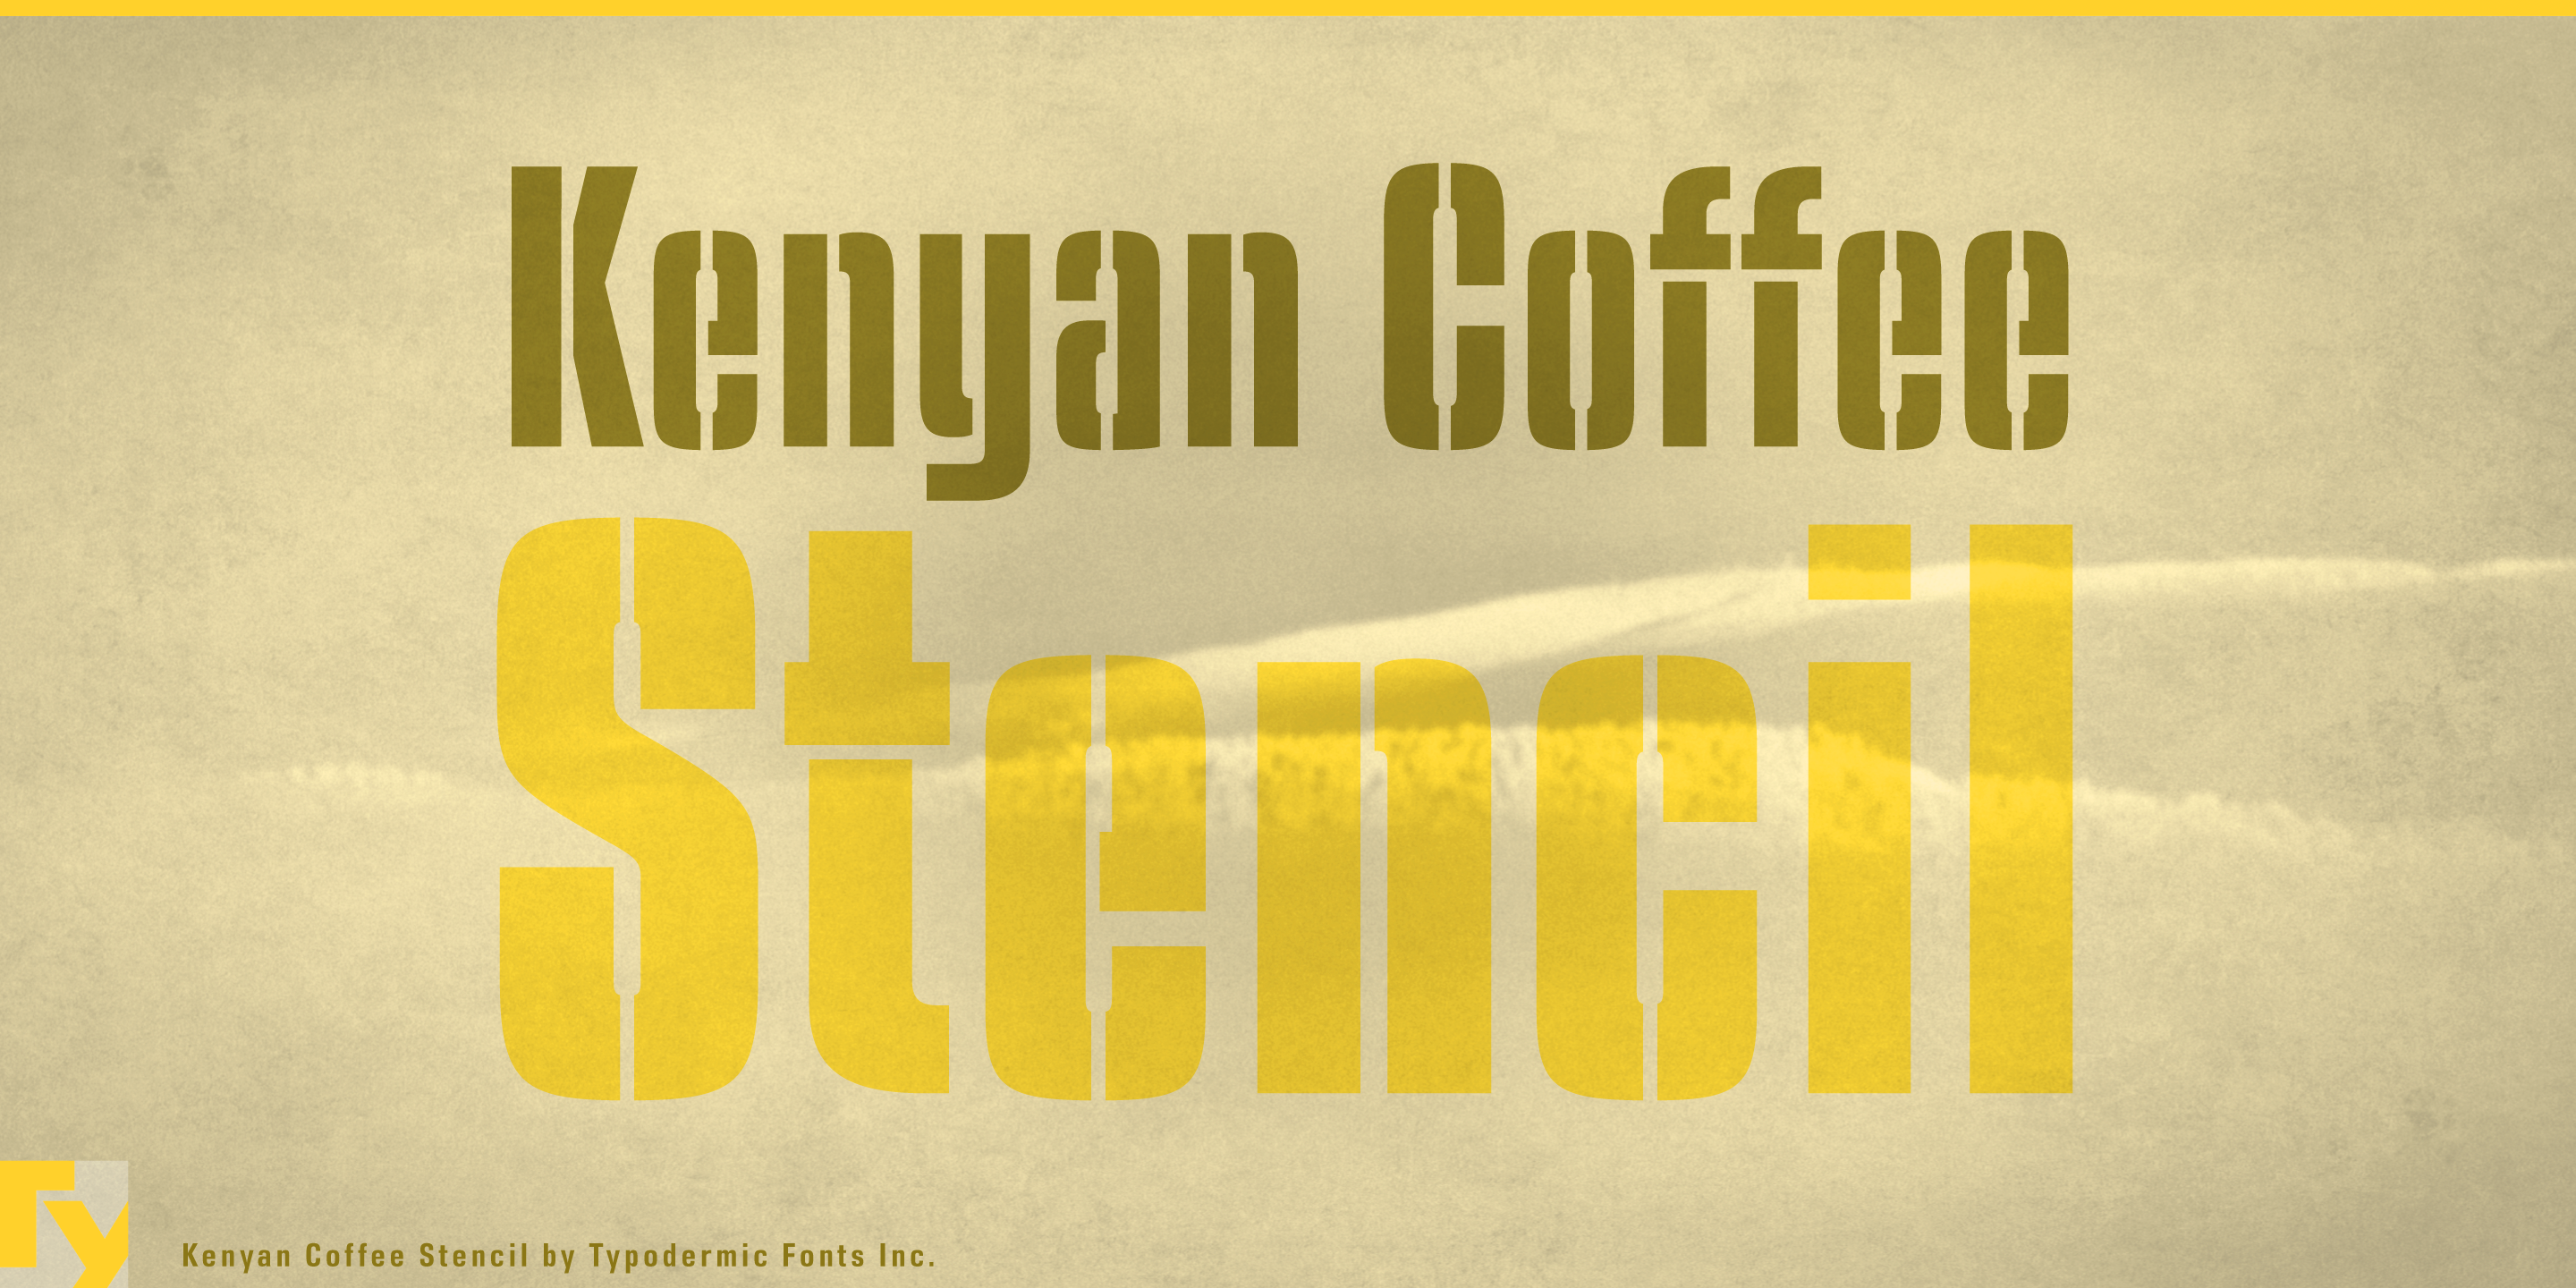 Police Kenyan Coffee Stencil